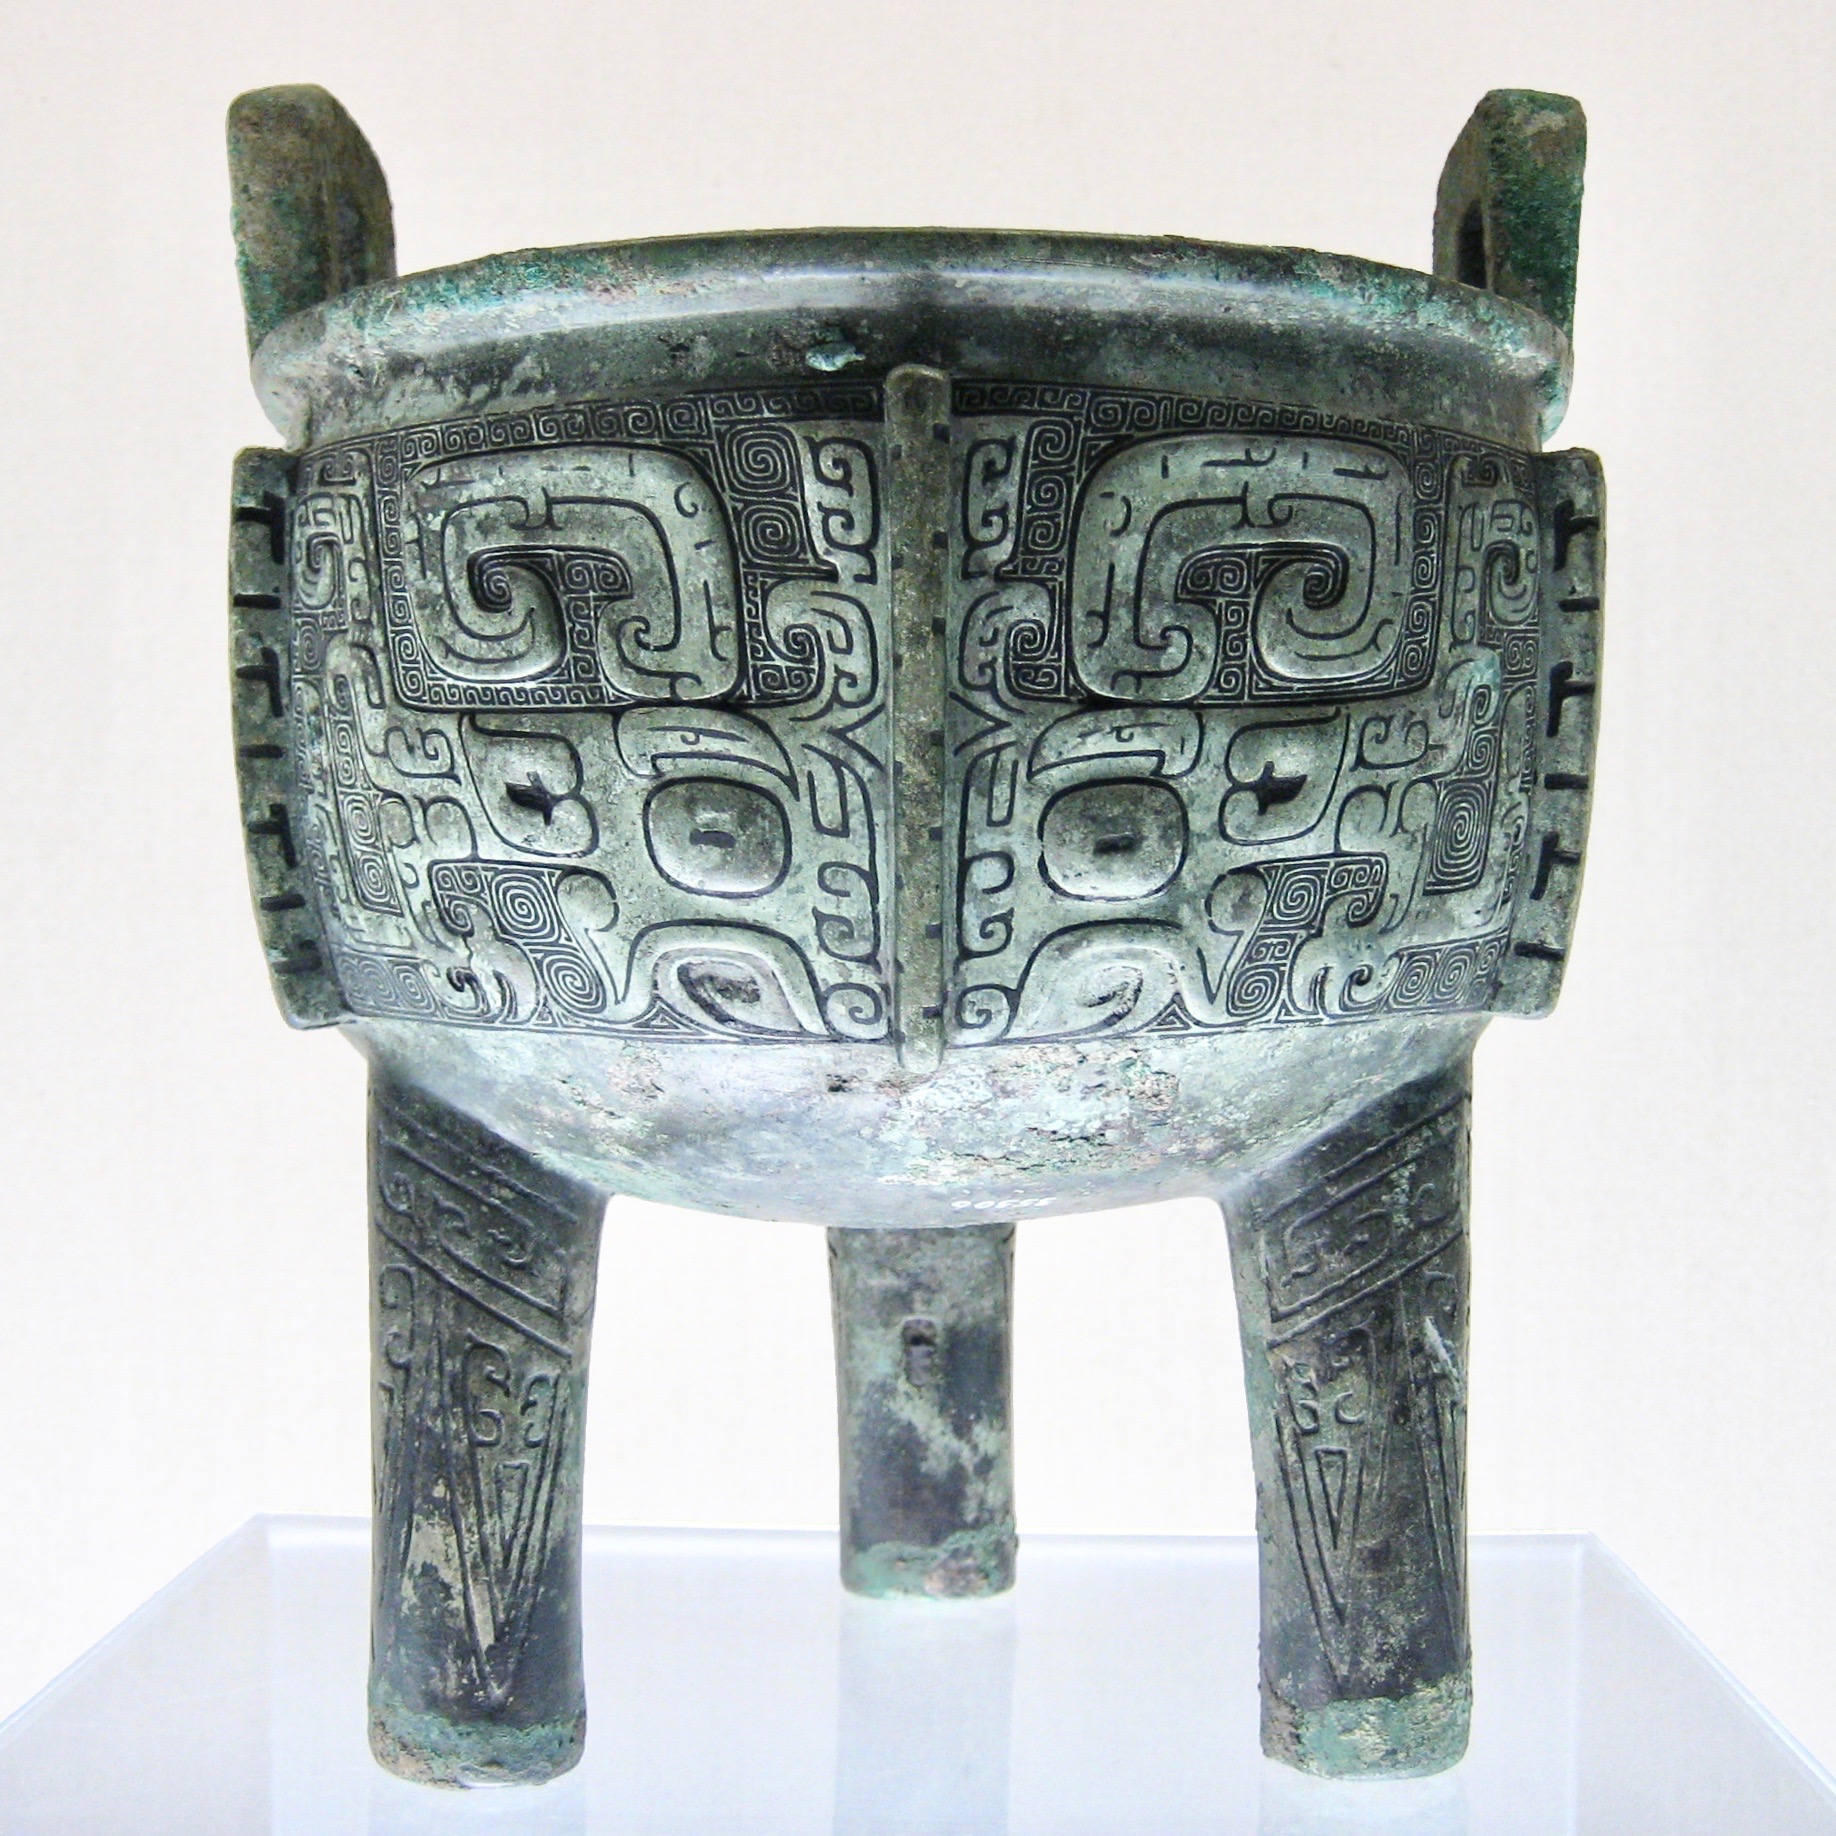 Shang dynasty bronze vessel